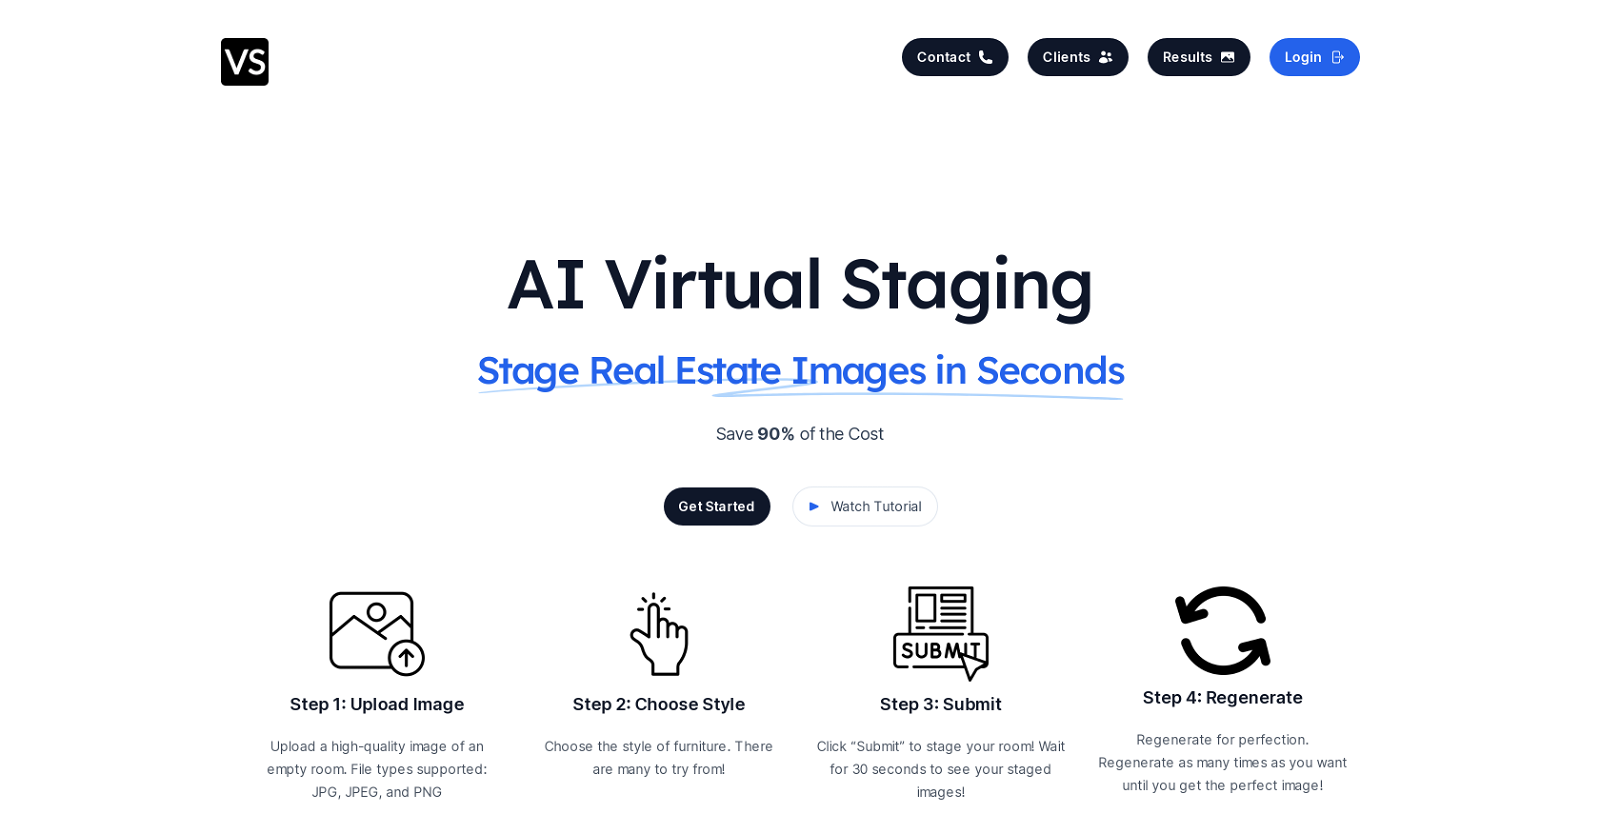 VirtualStagingAI website